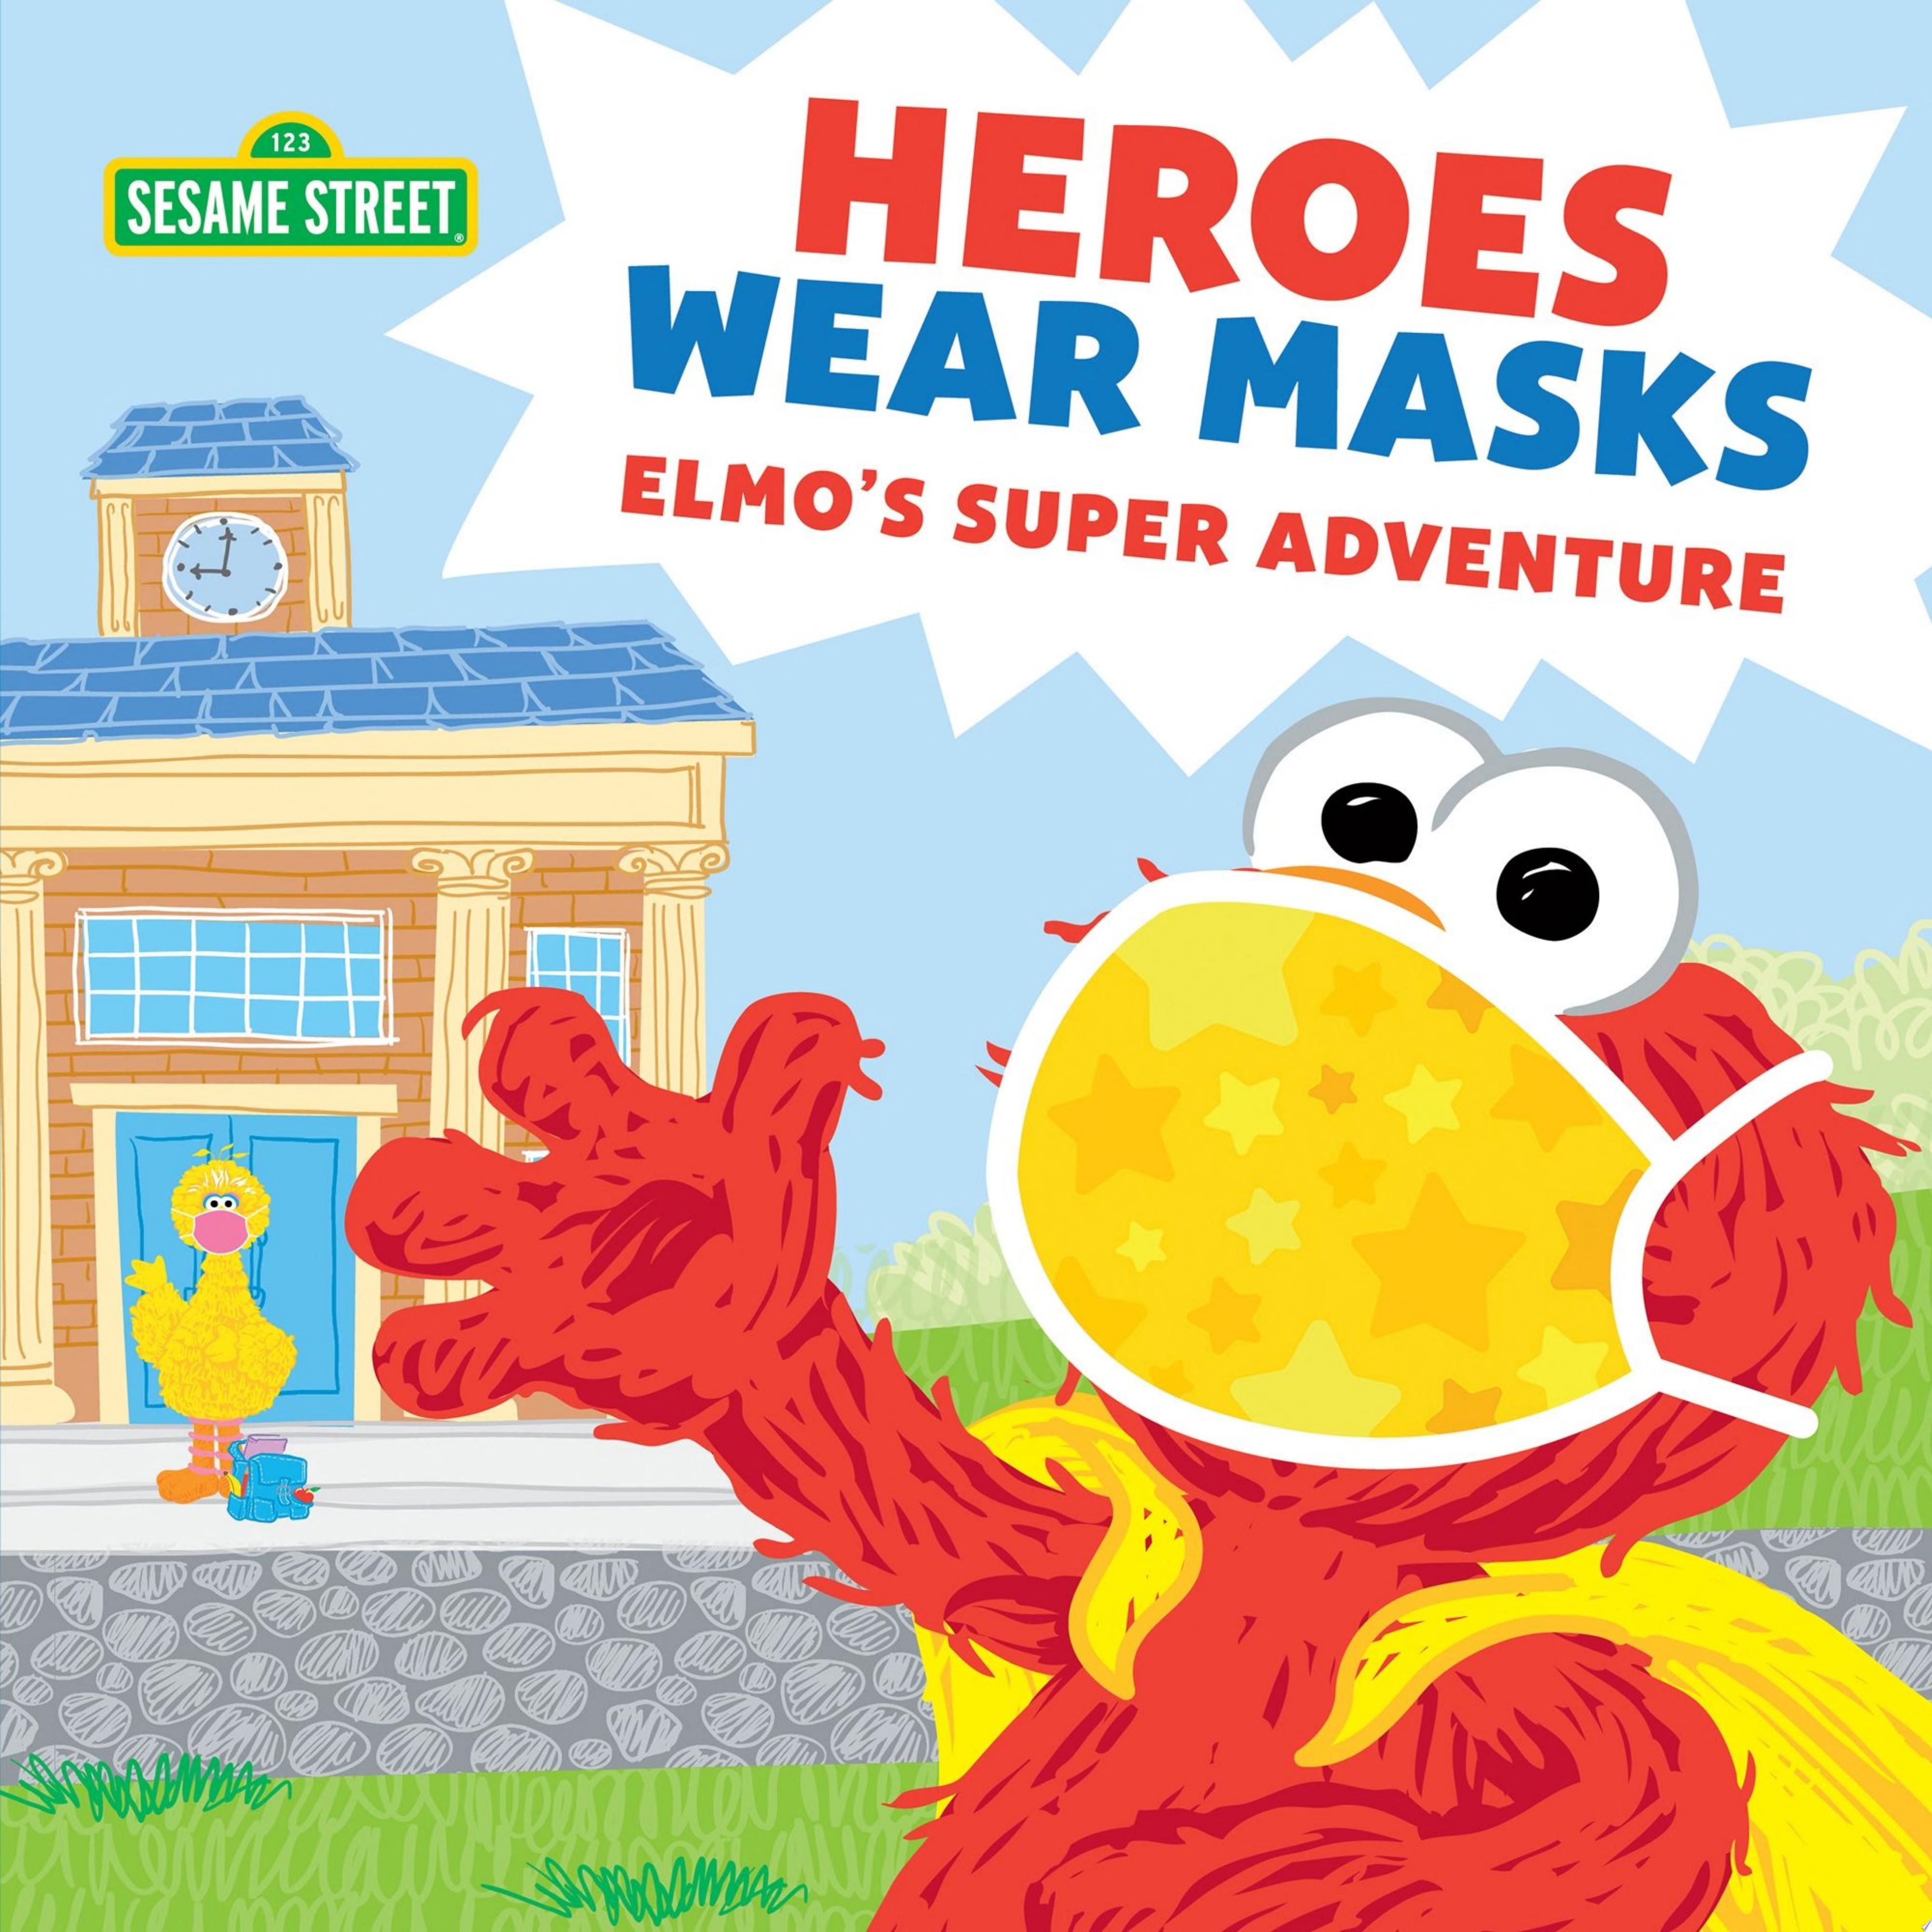 Image for "Heroes Wear Masks"